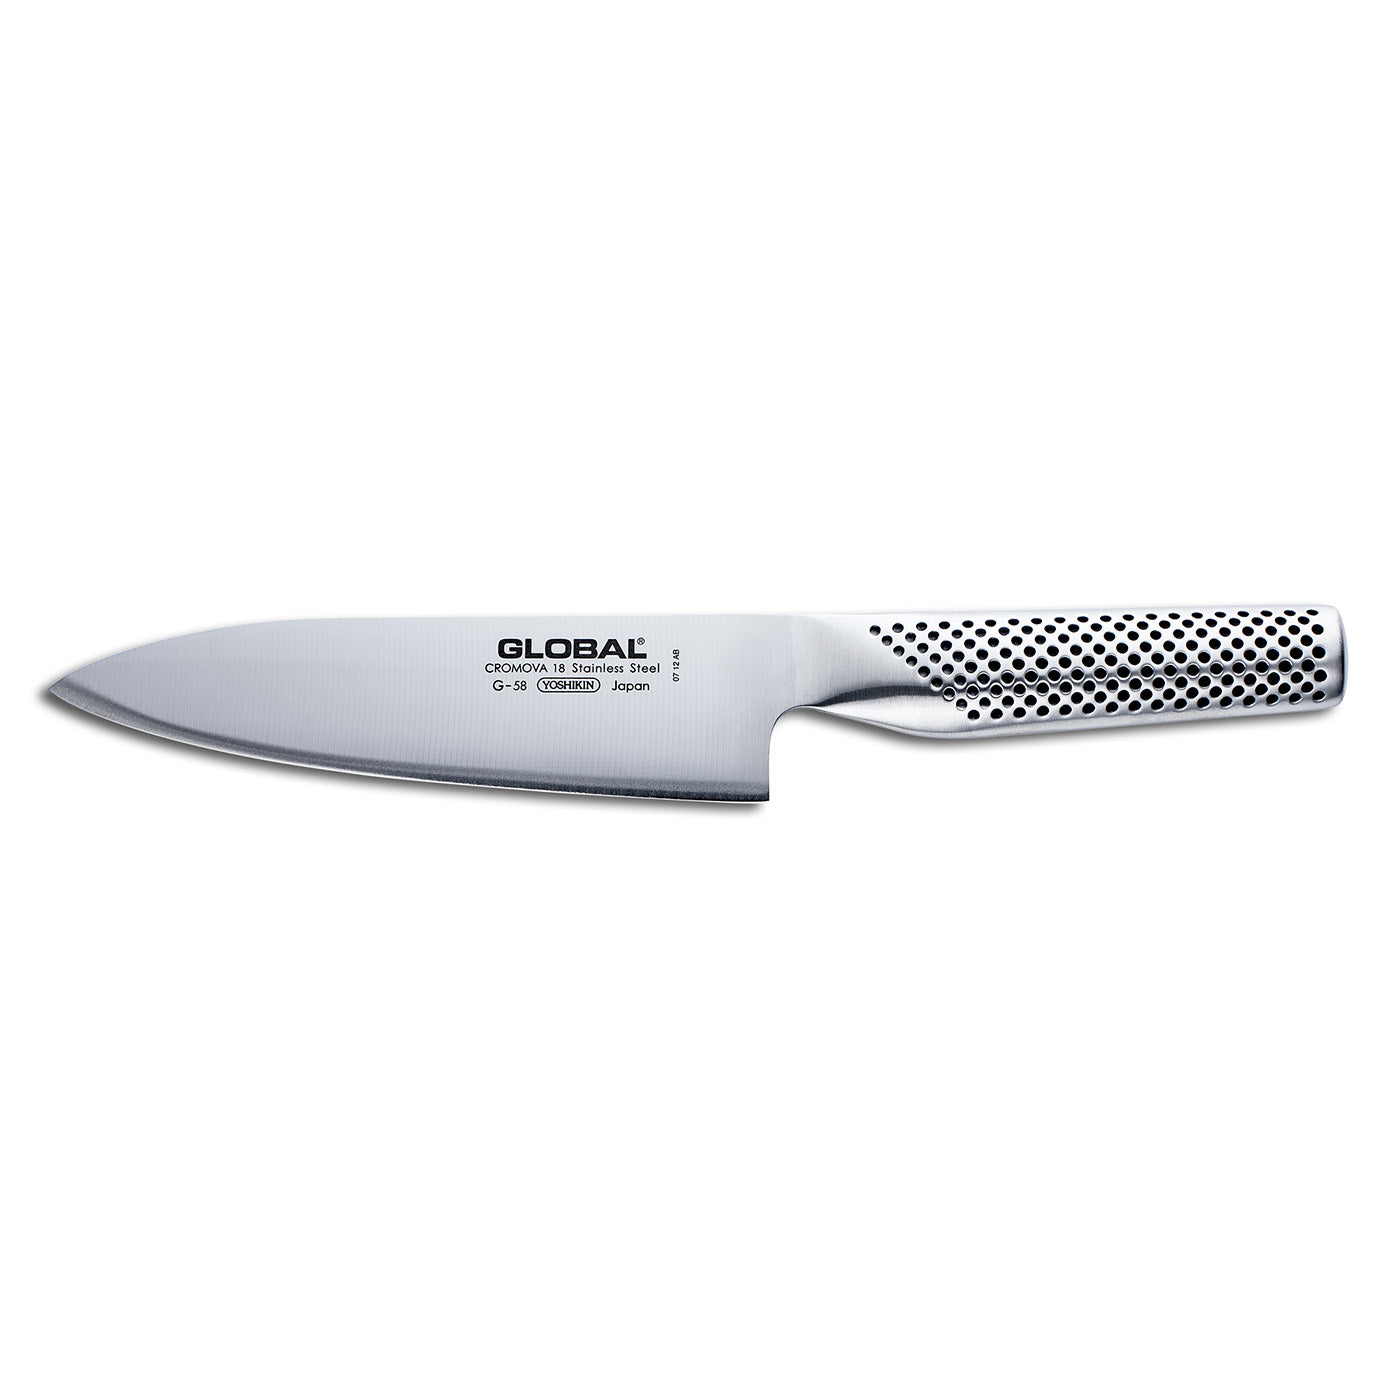 Global G-58 6-inch Chef's Knife